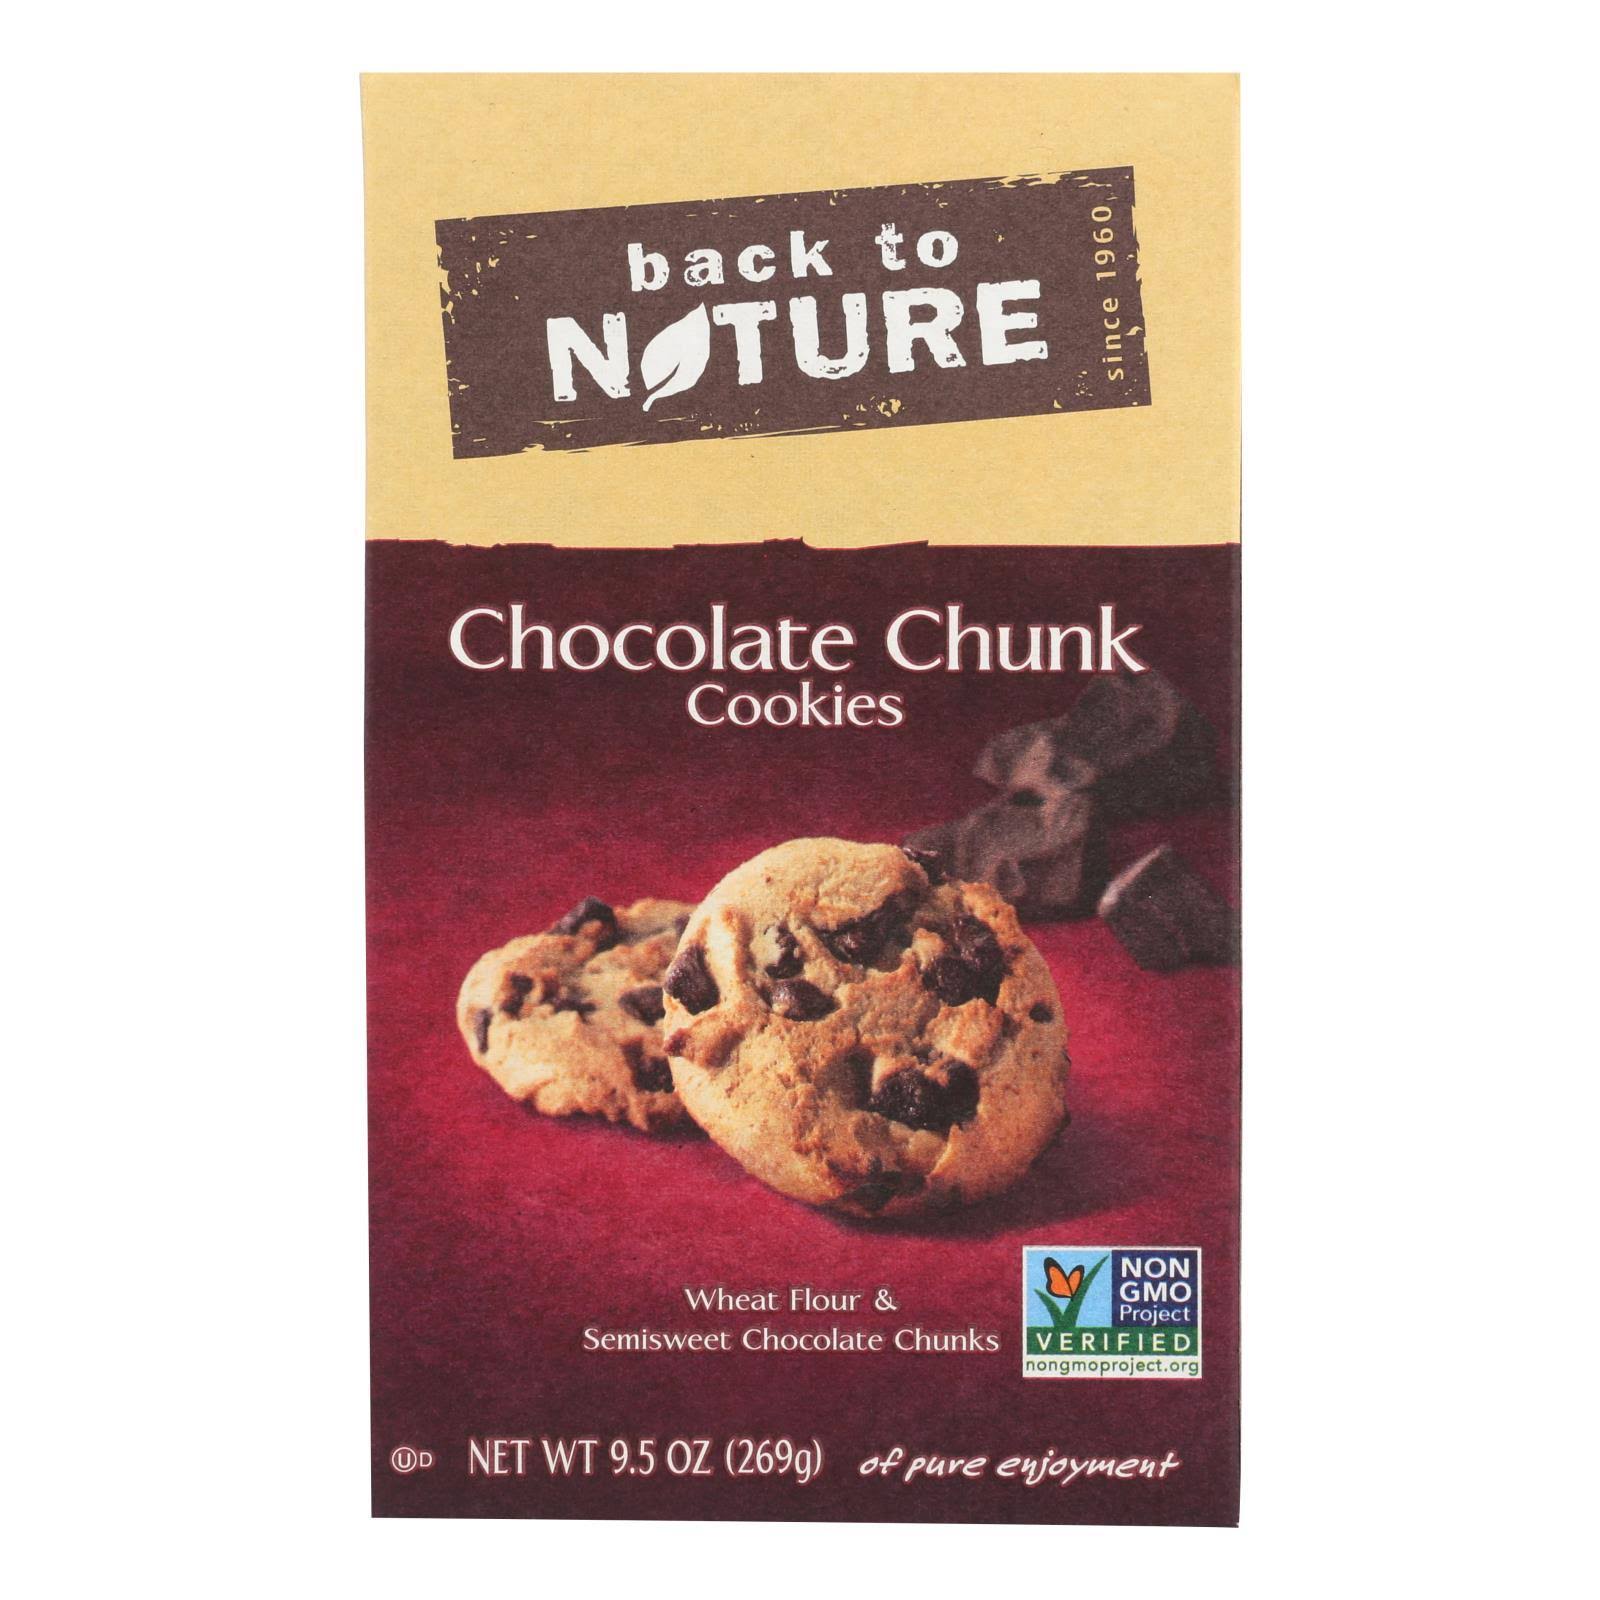 Back to Nature Chocolate Chunk Cookies - 9.5oz